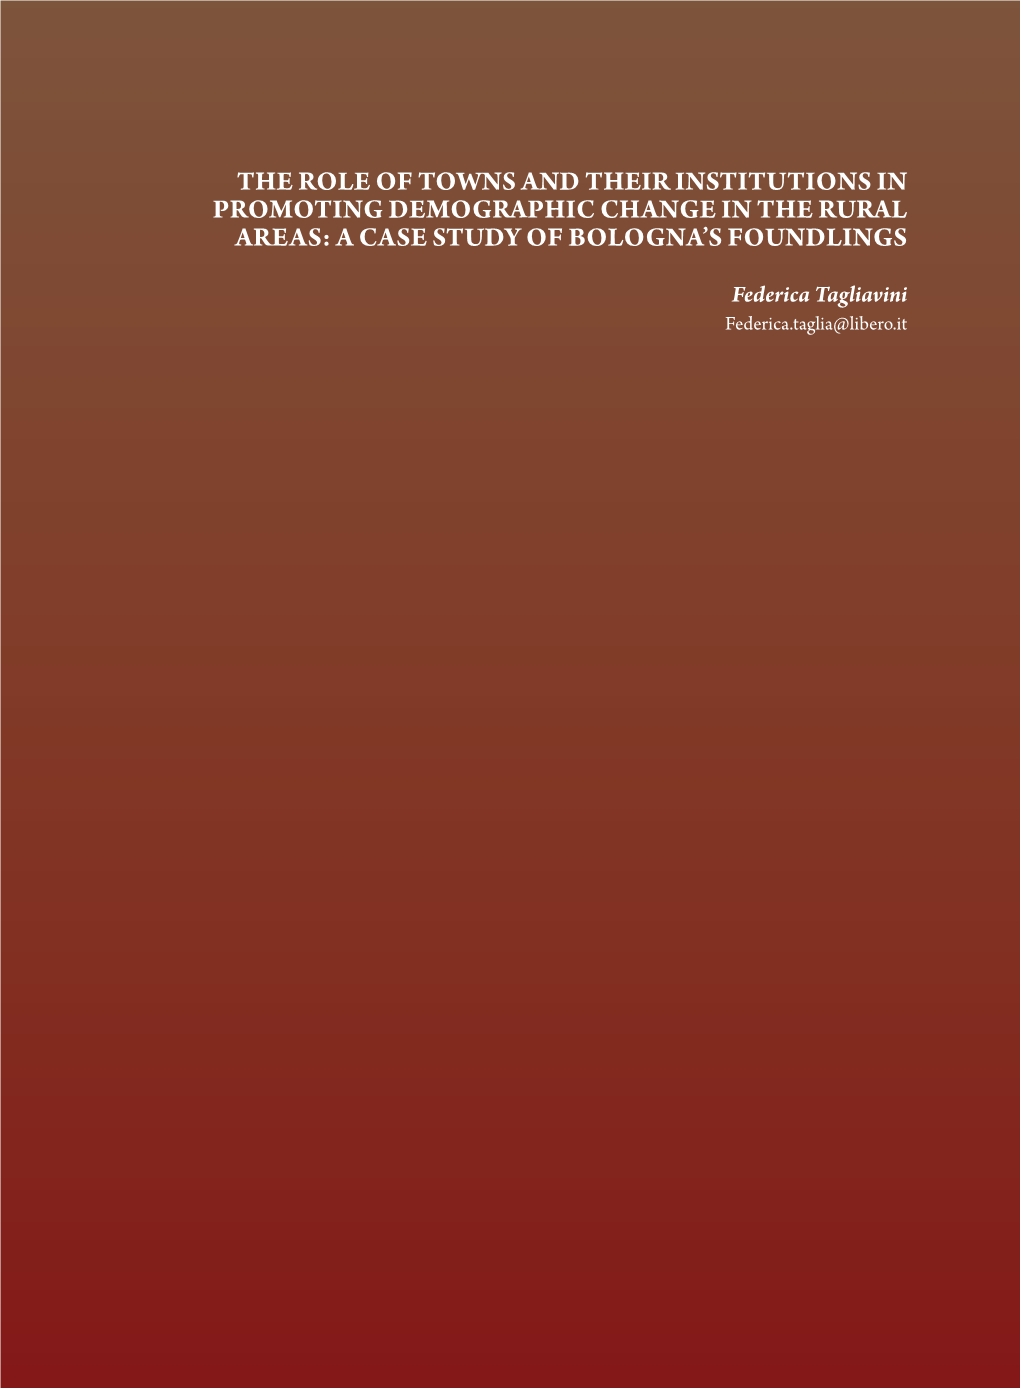 A Case Study of Bologna's Foundlings